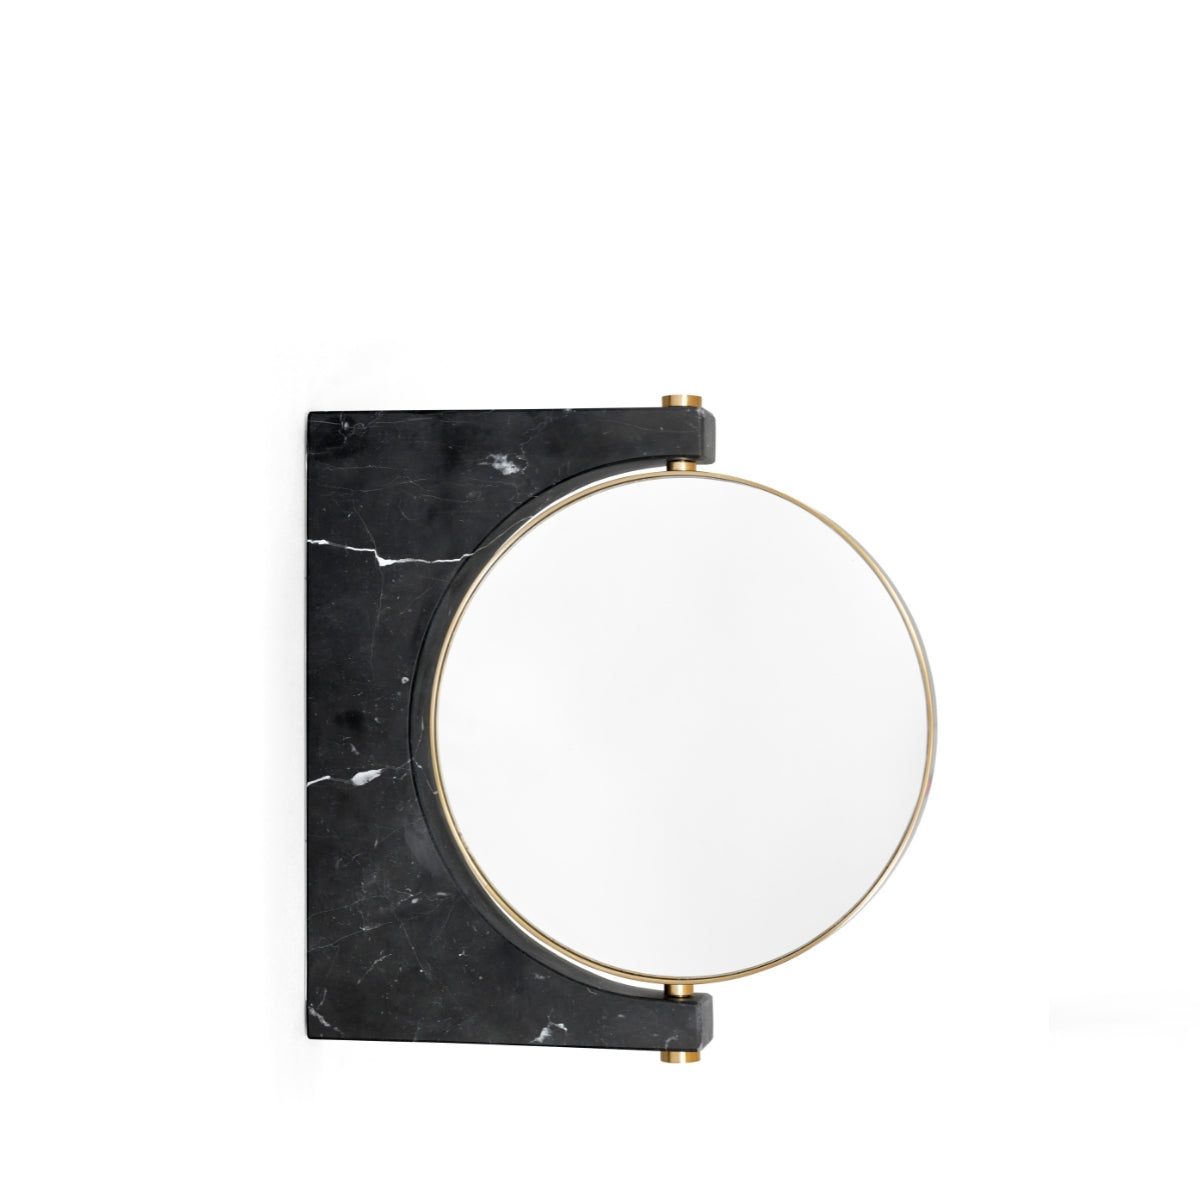 Audo Copenhagen | Pepe Marble Mirror, Wall